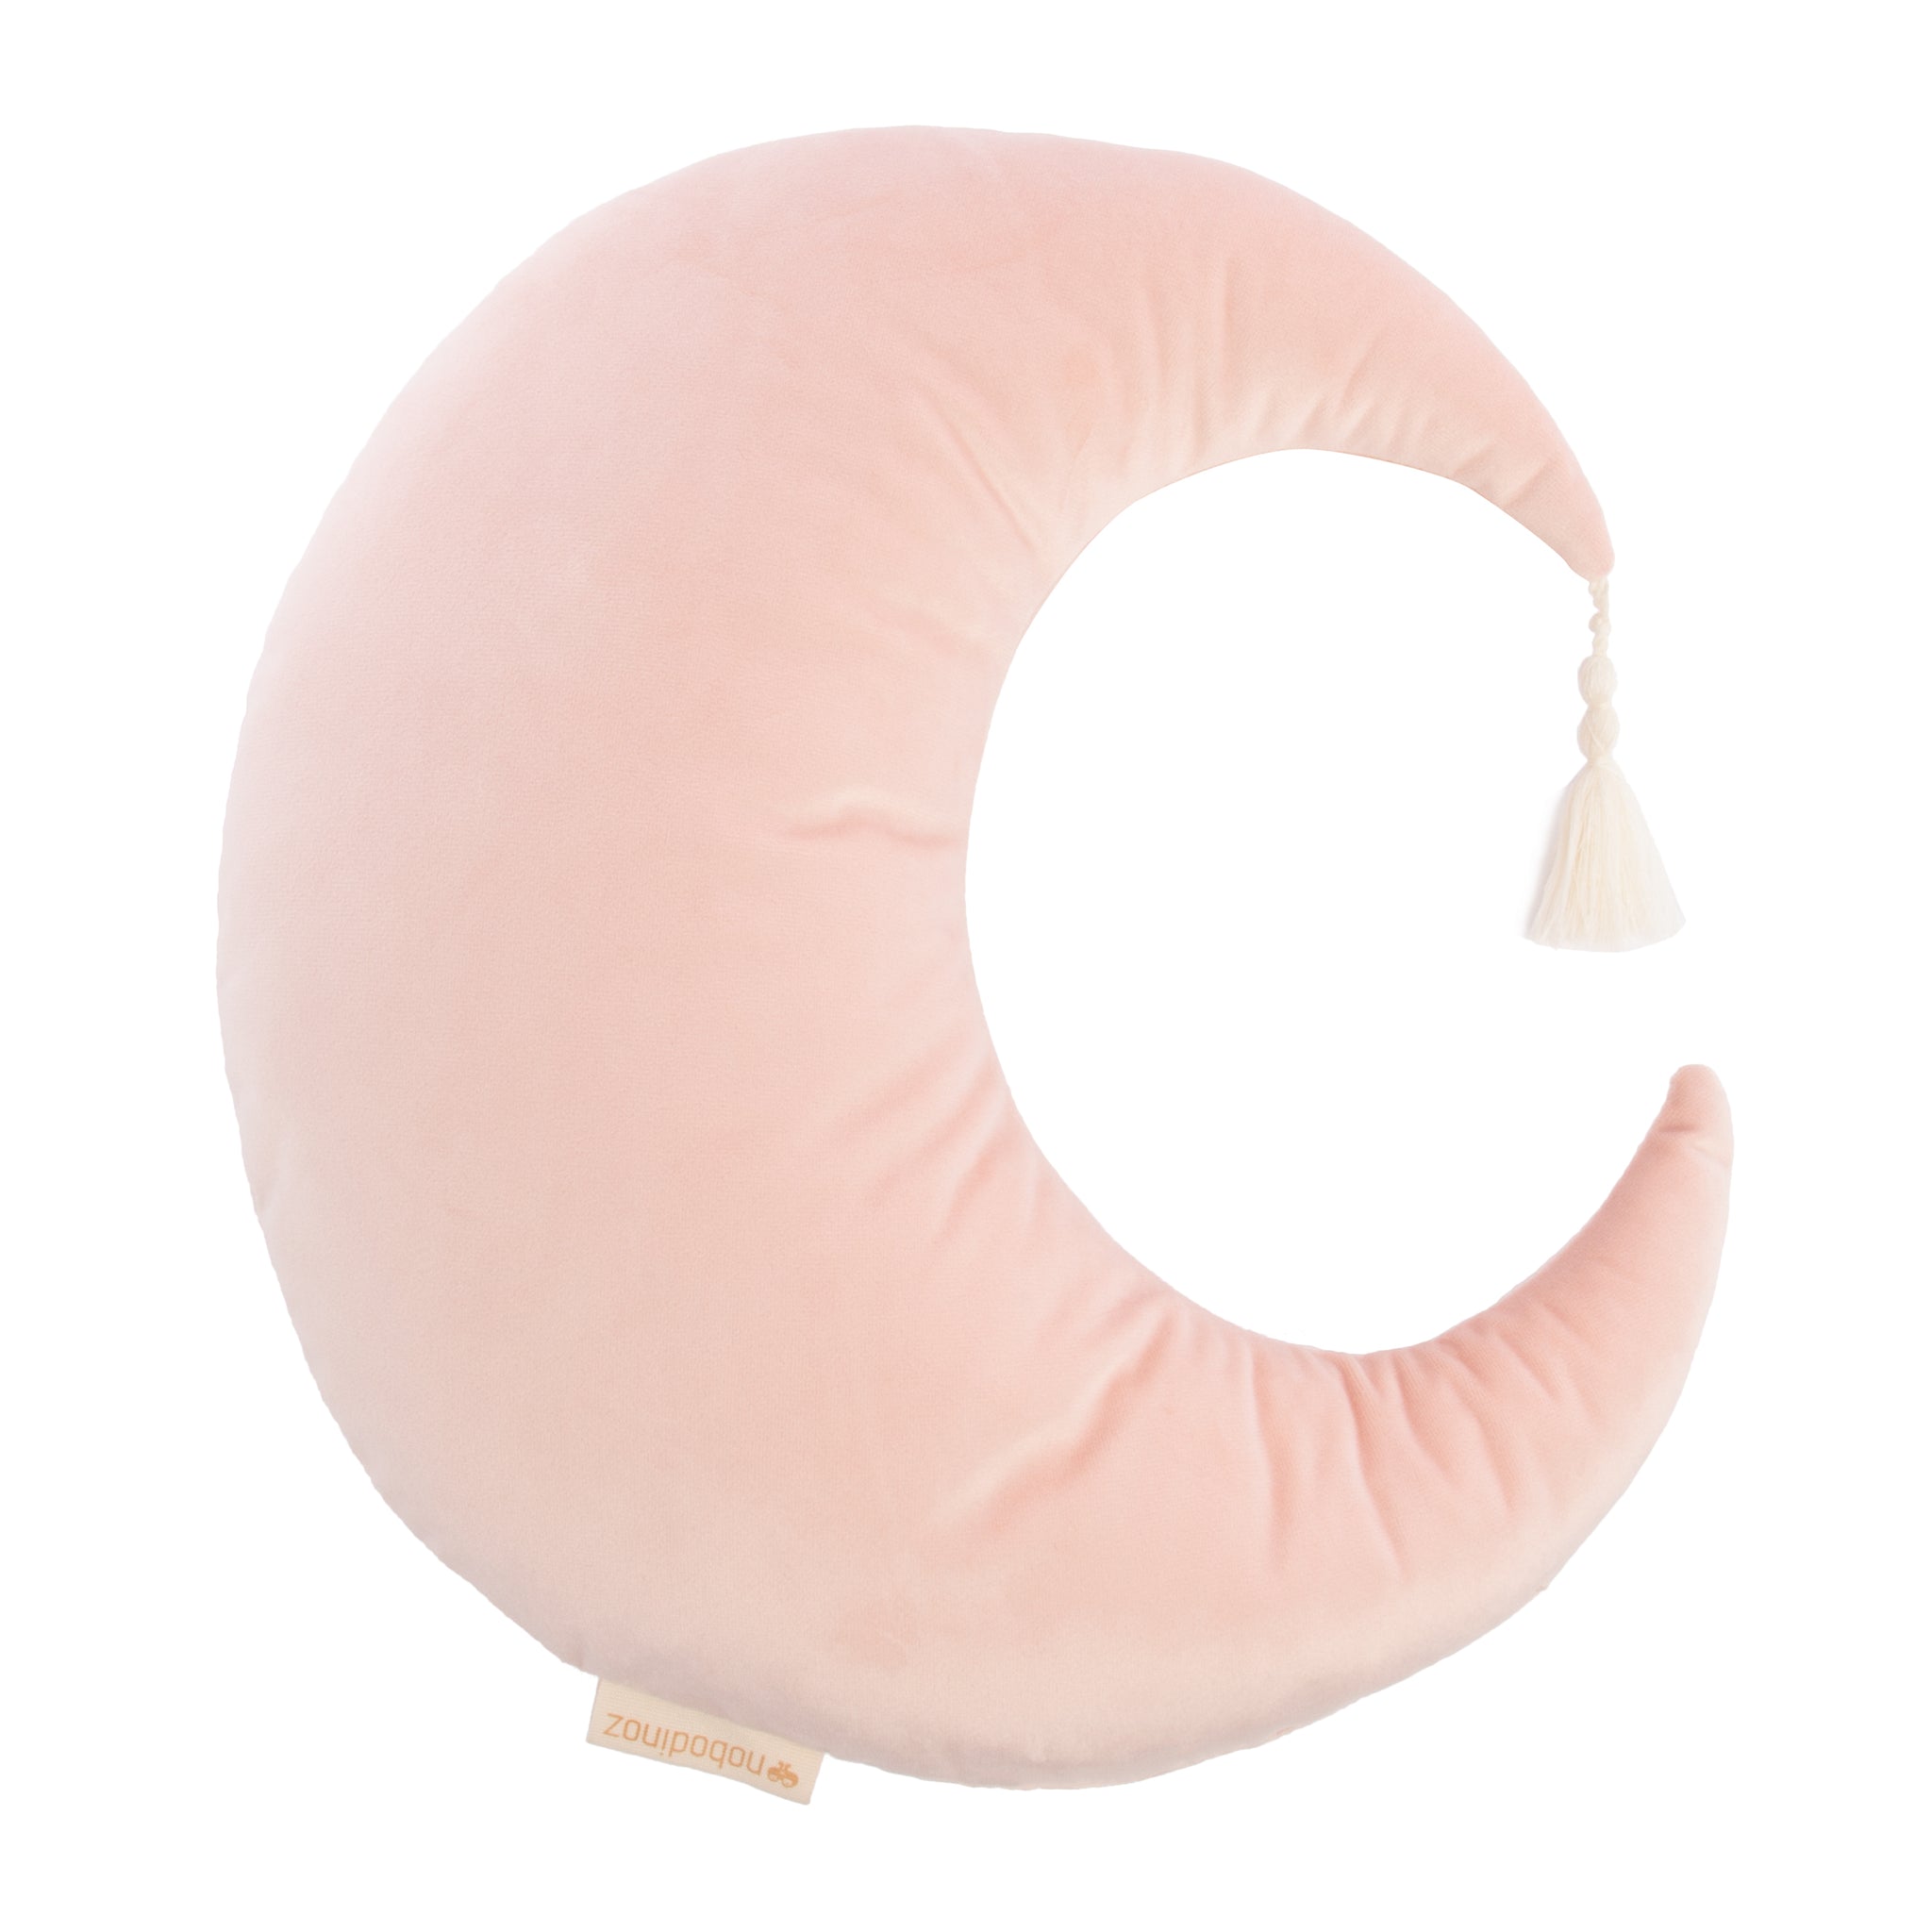  Nobodinoz Pierrot Moon Velvet Cushion - Bloom Pink